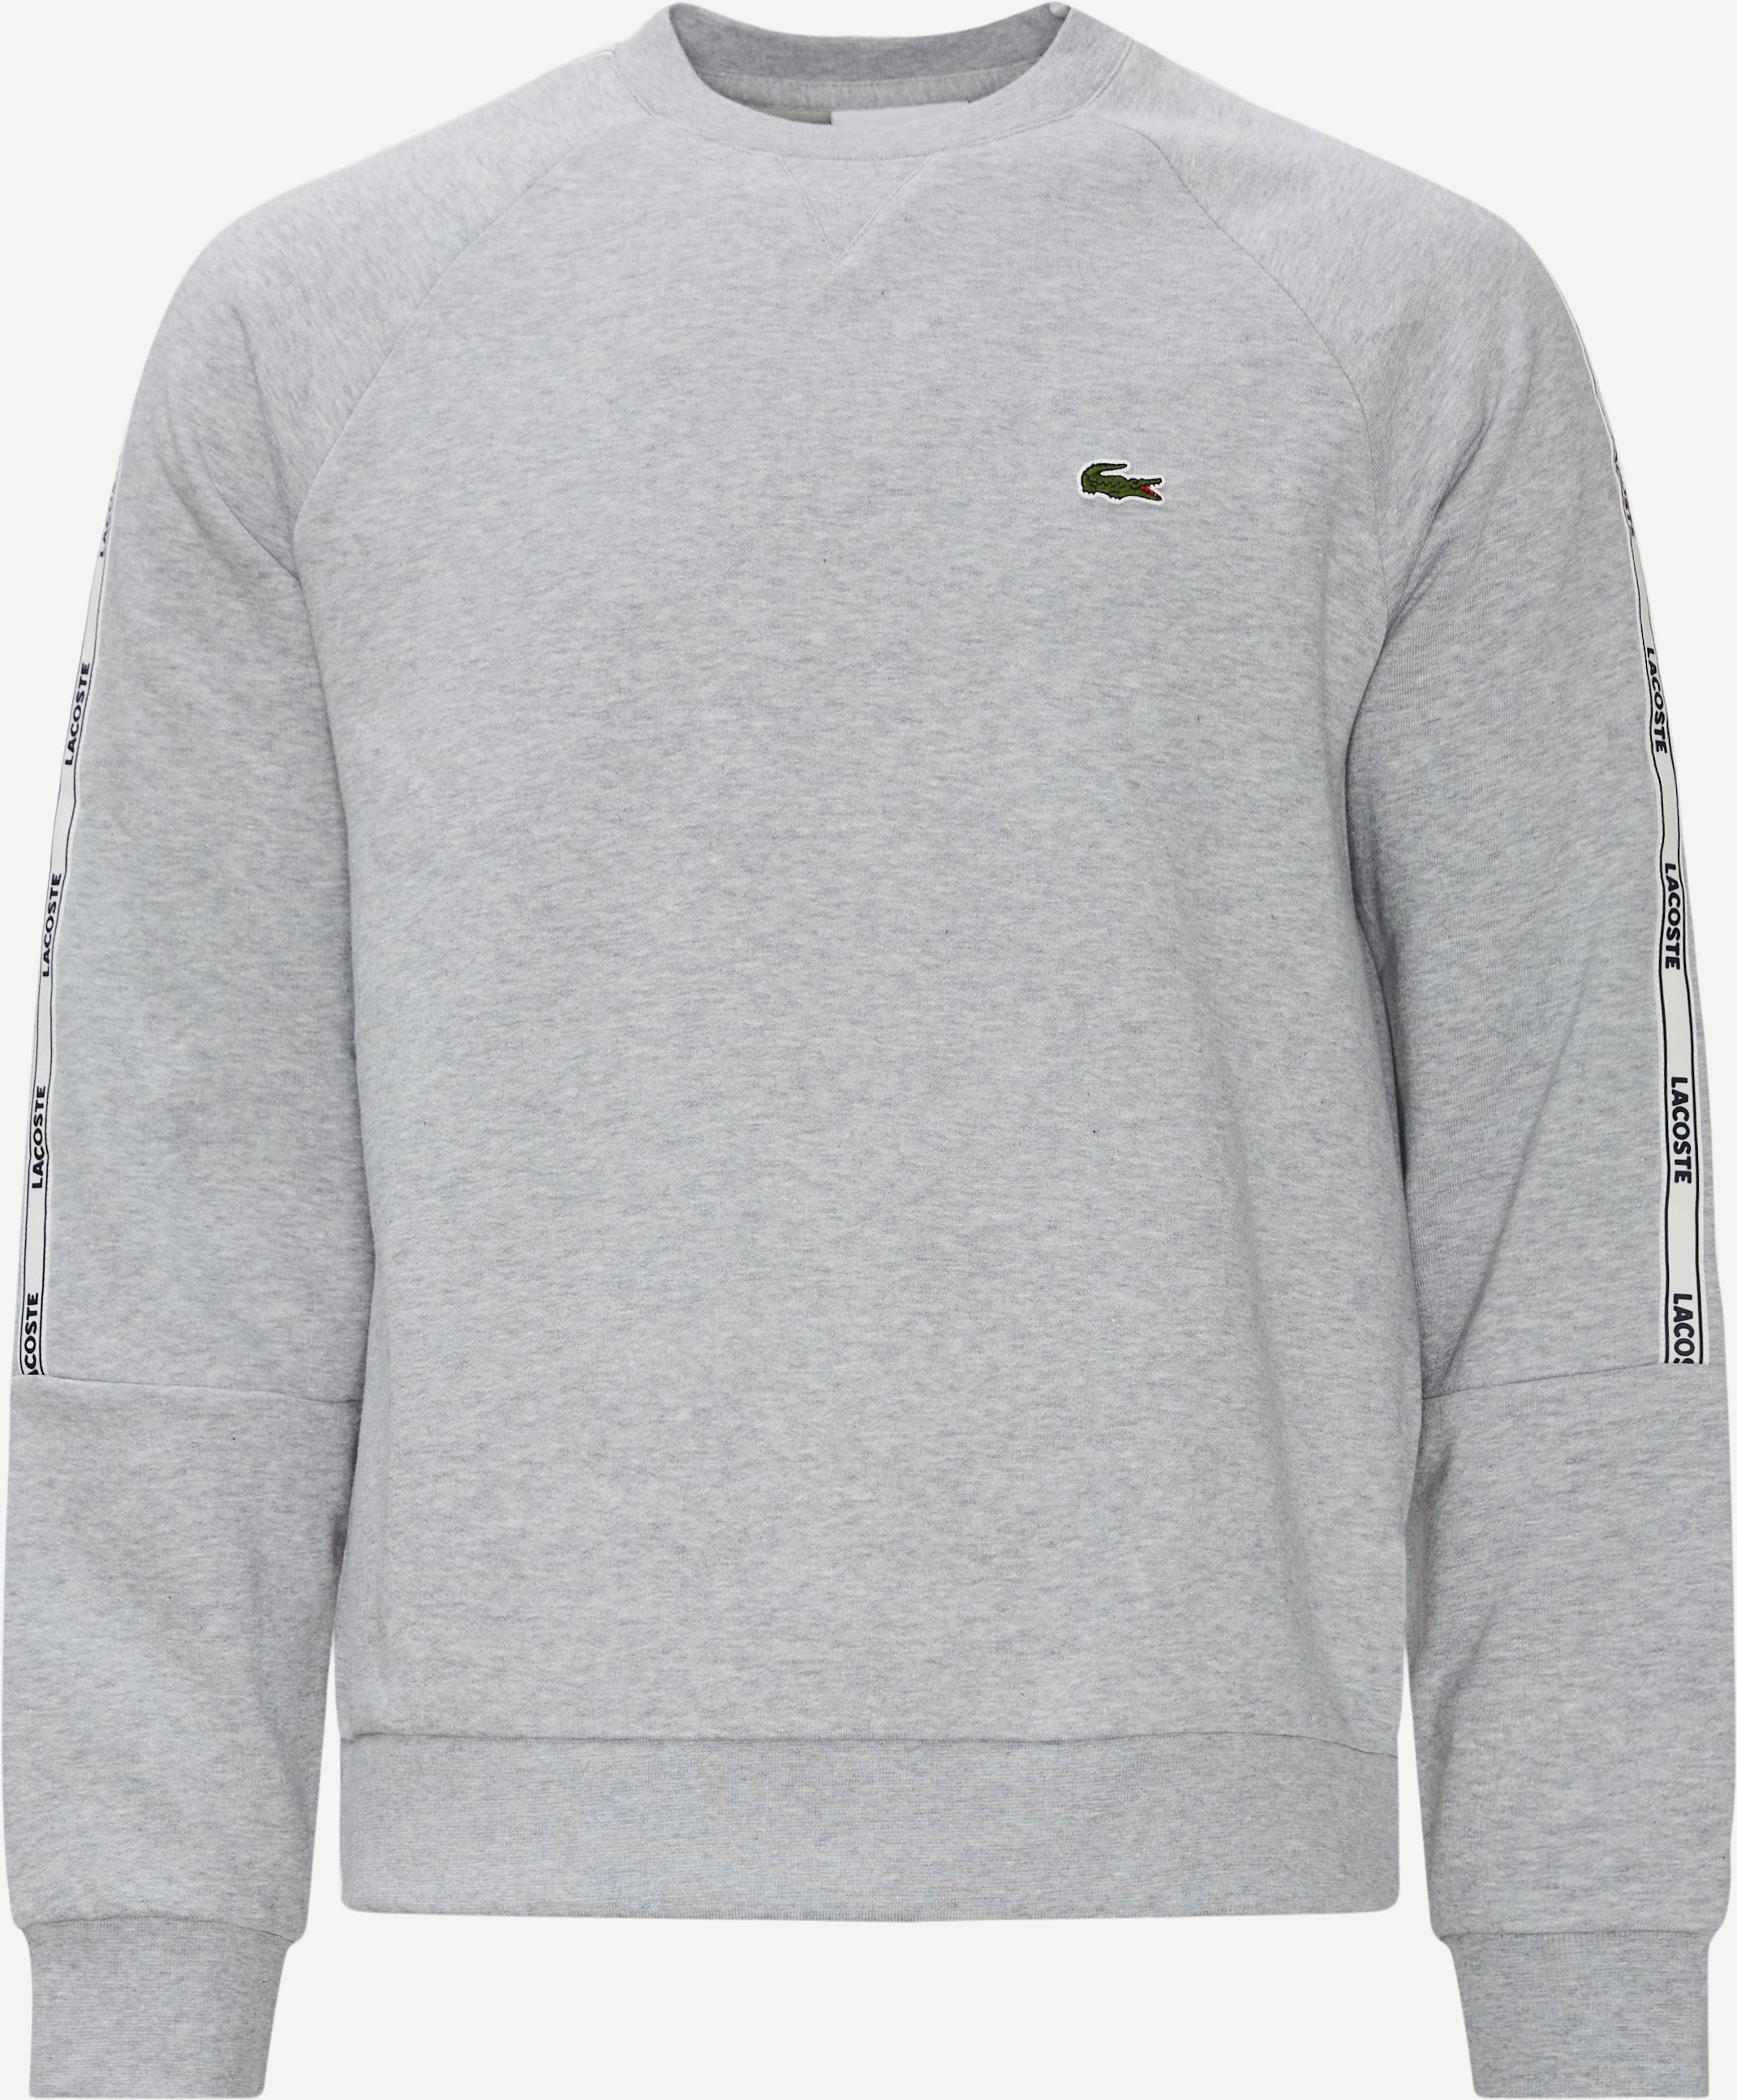 Sweatshirts - Classic fit - Grey